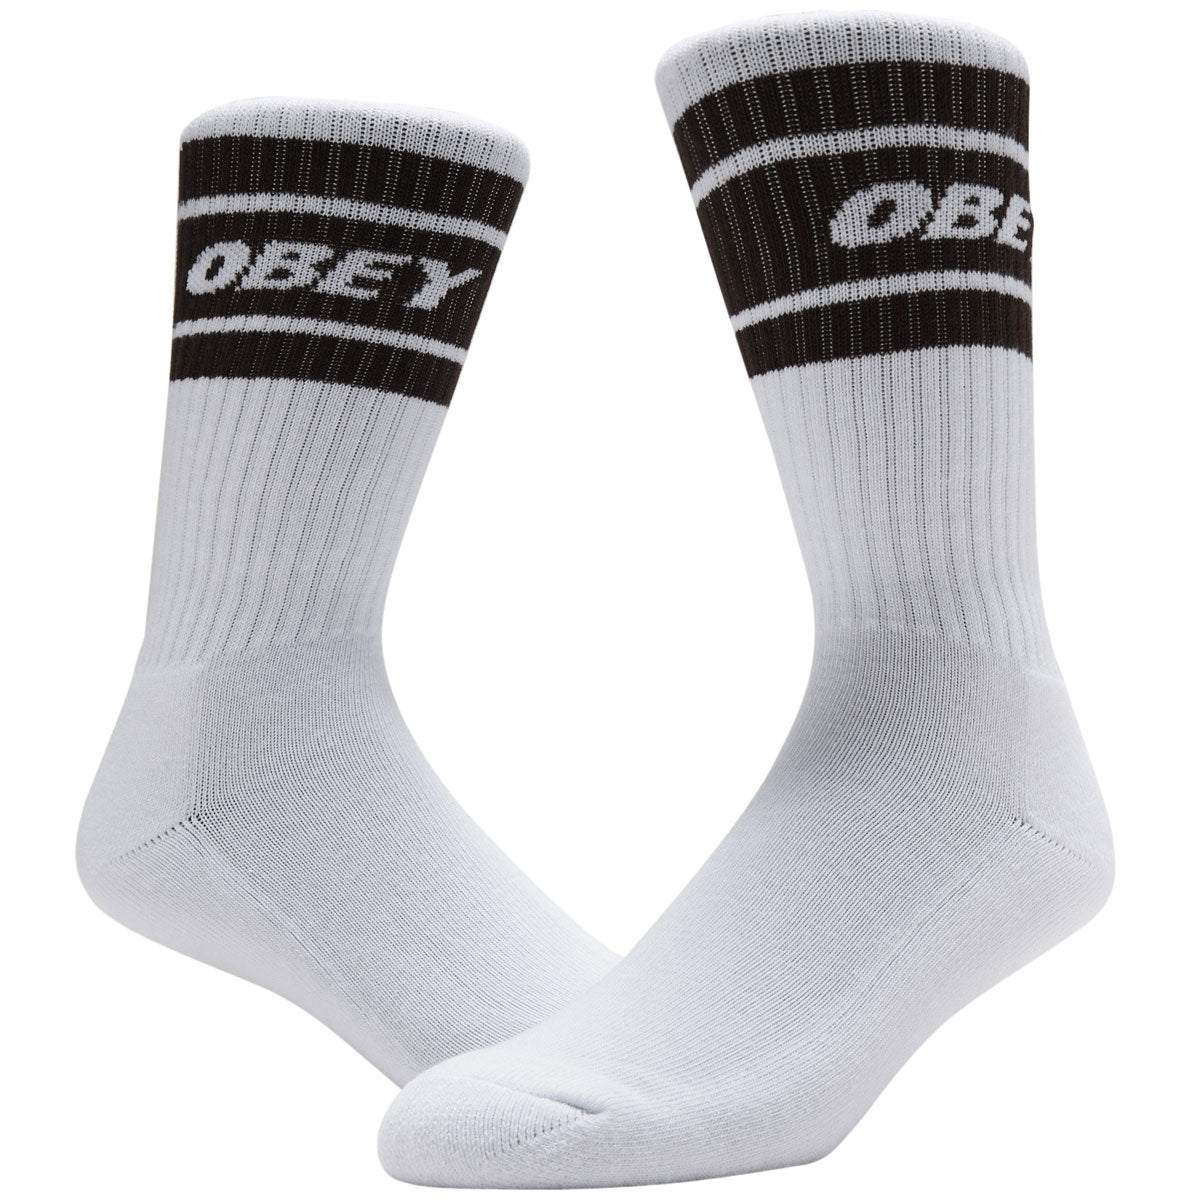 Obey Cooper II Socks - White/Java Brown image 2